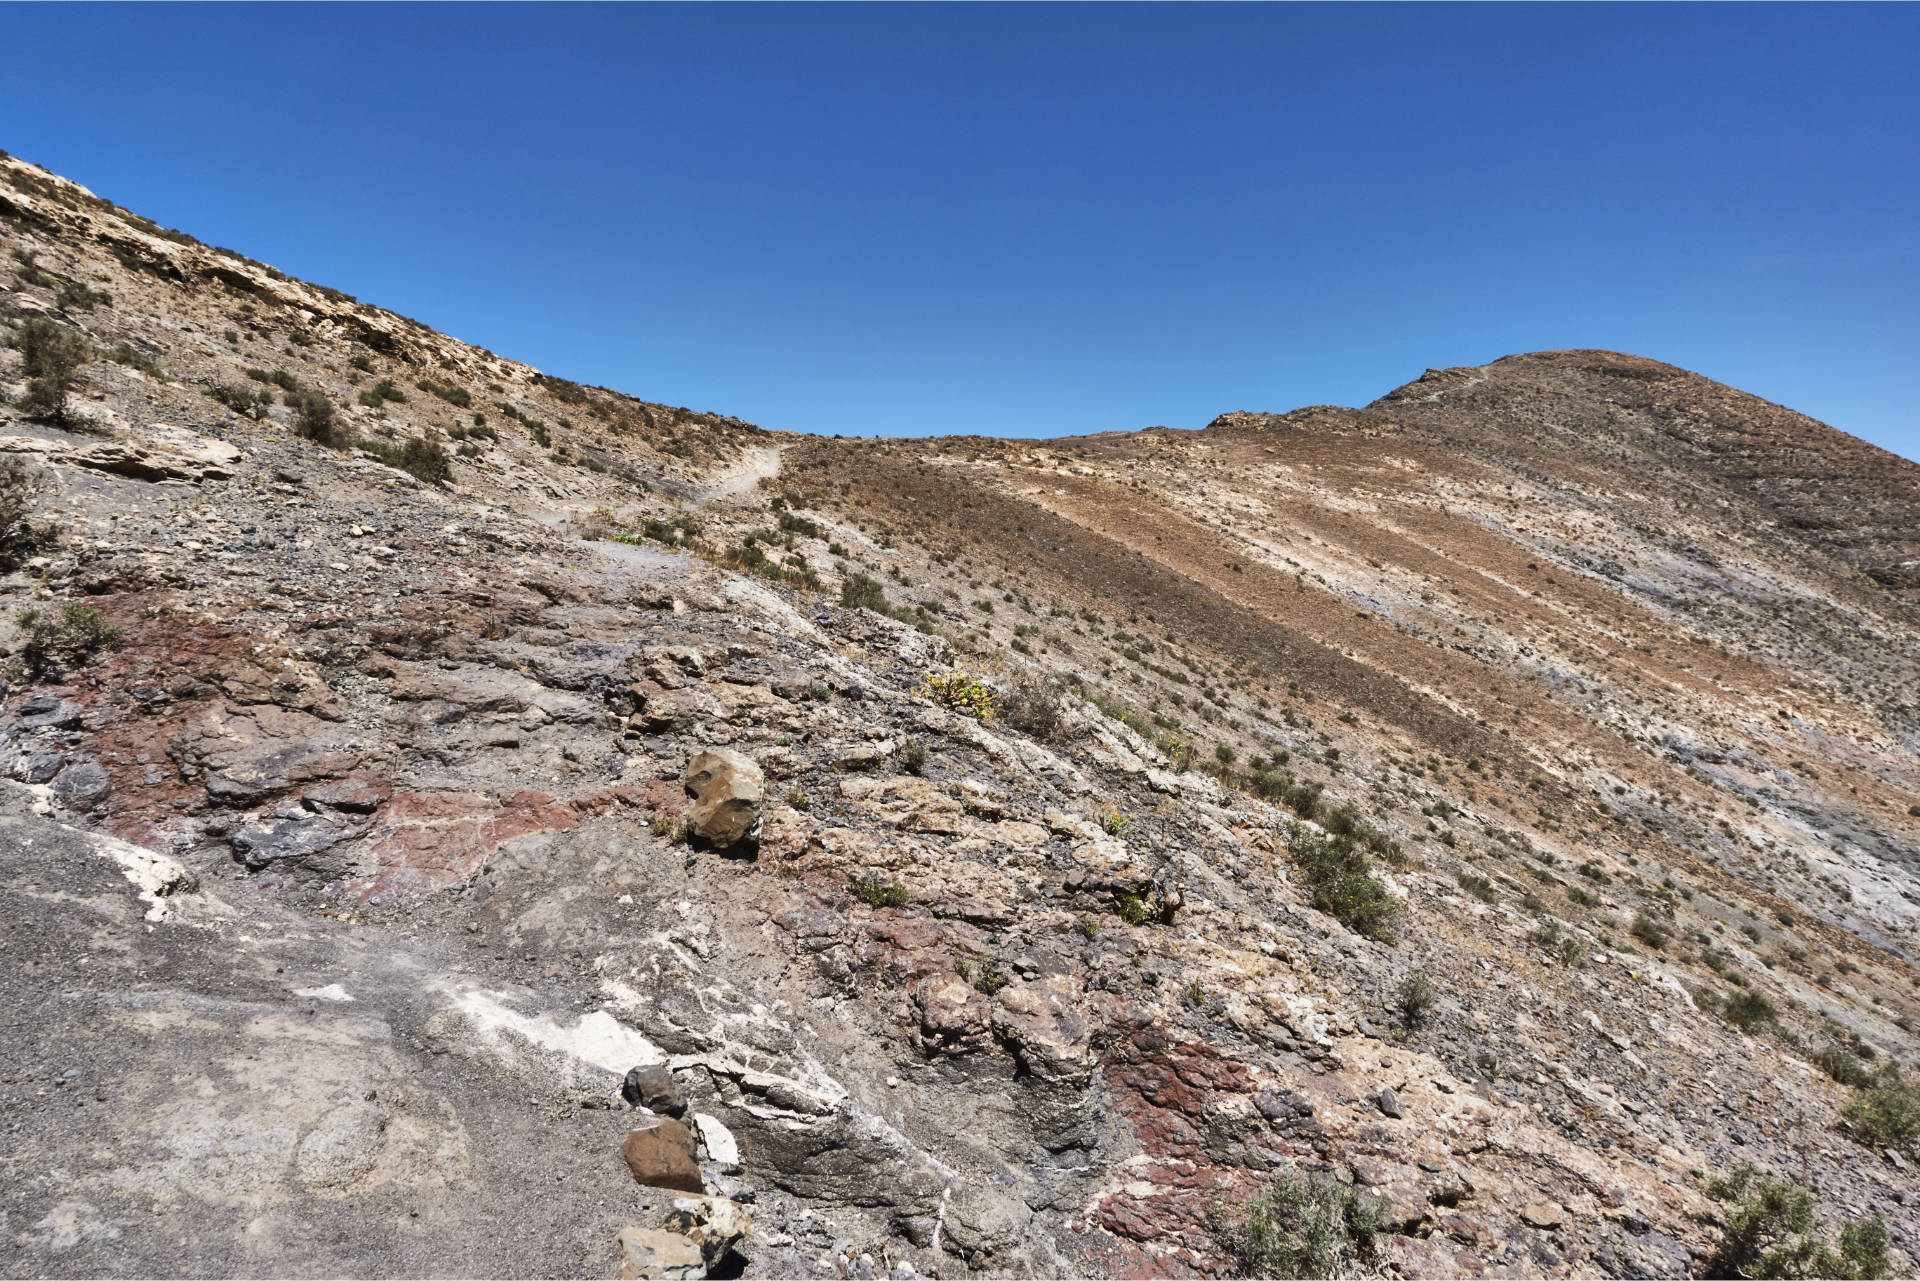 Durch das Valle de Tetir Richtung Westen zum namenlosen Pass zwischen Morro de Facay (520m) und Morro de Cagadas Blandas (525m).